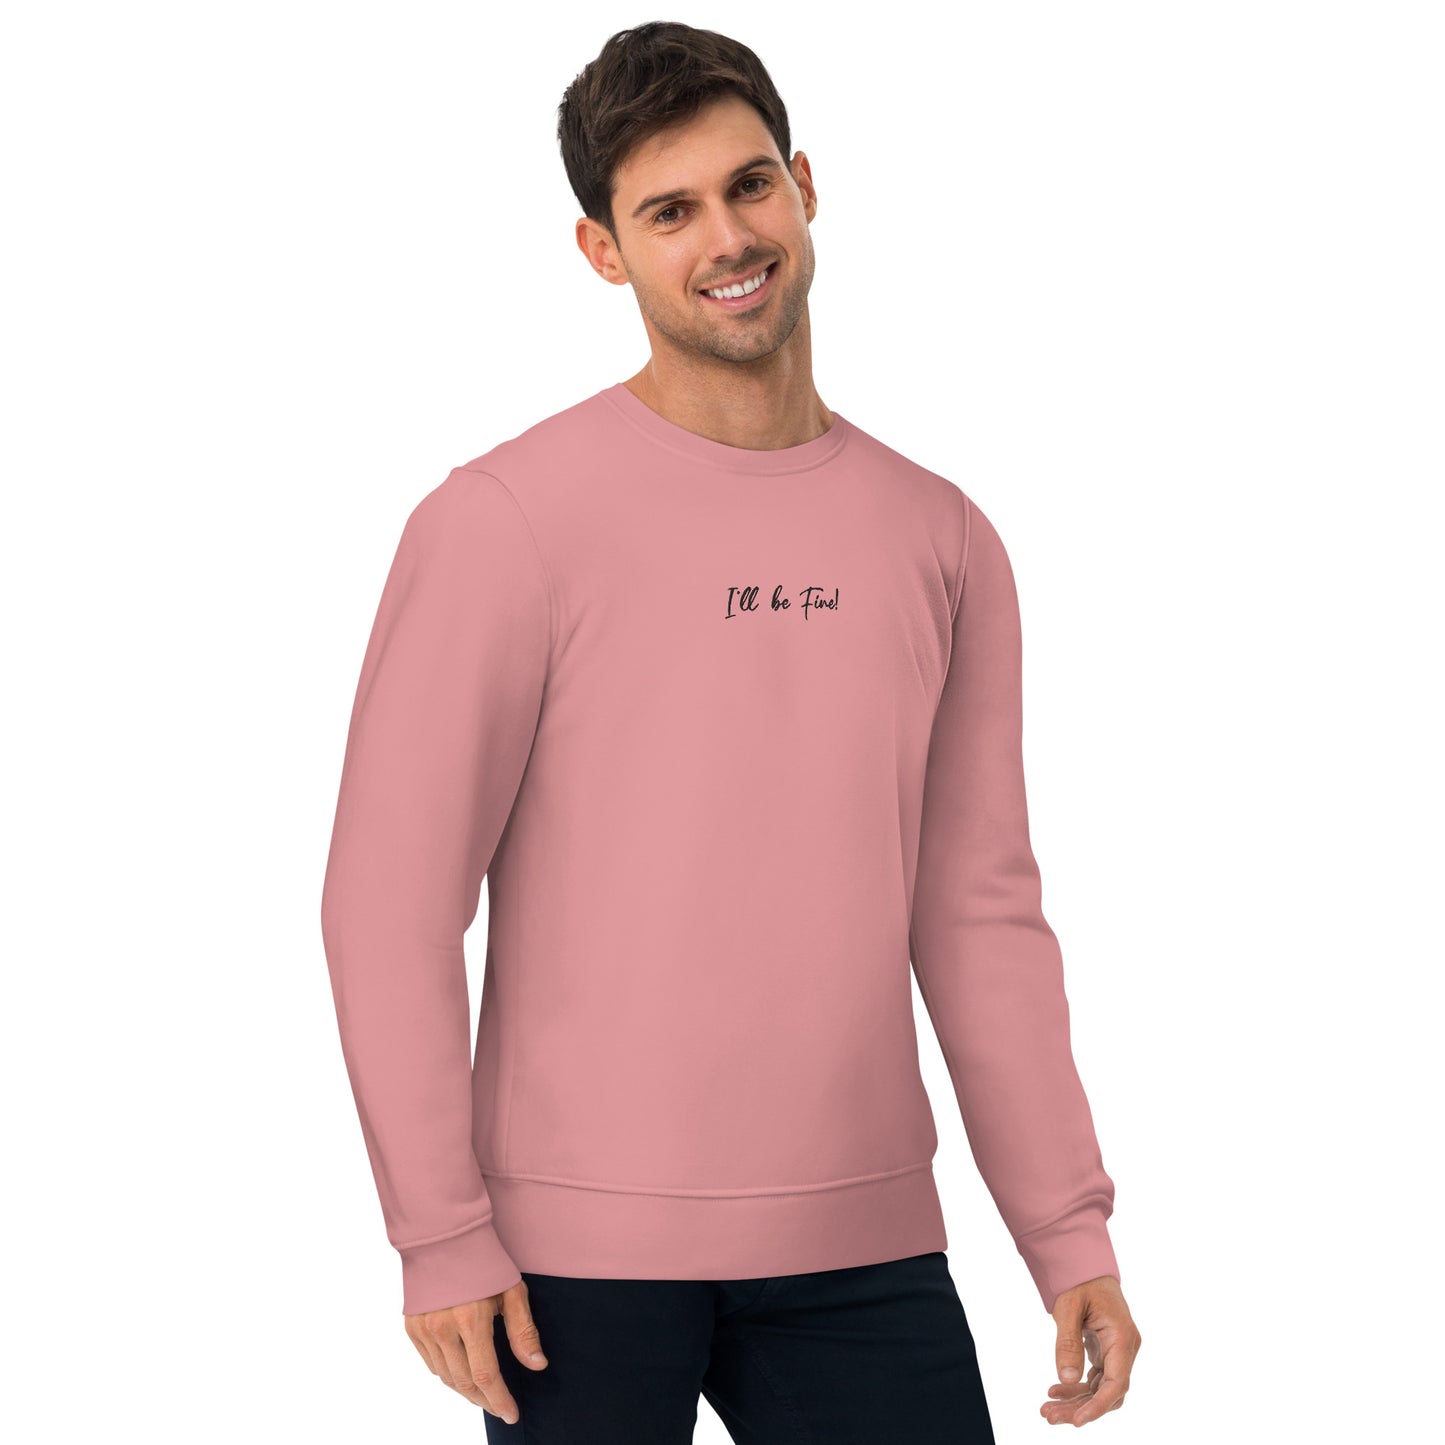 I'll Be Fine! Men's Organic Cotton Sweatshirt